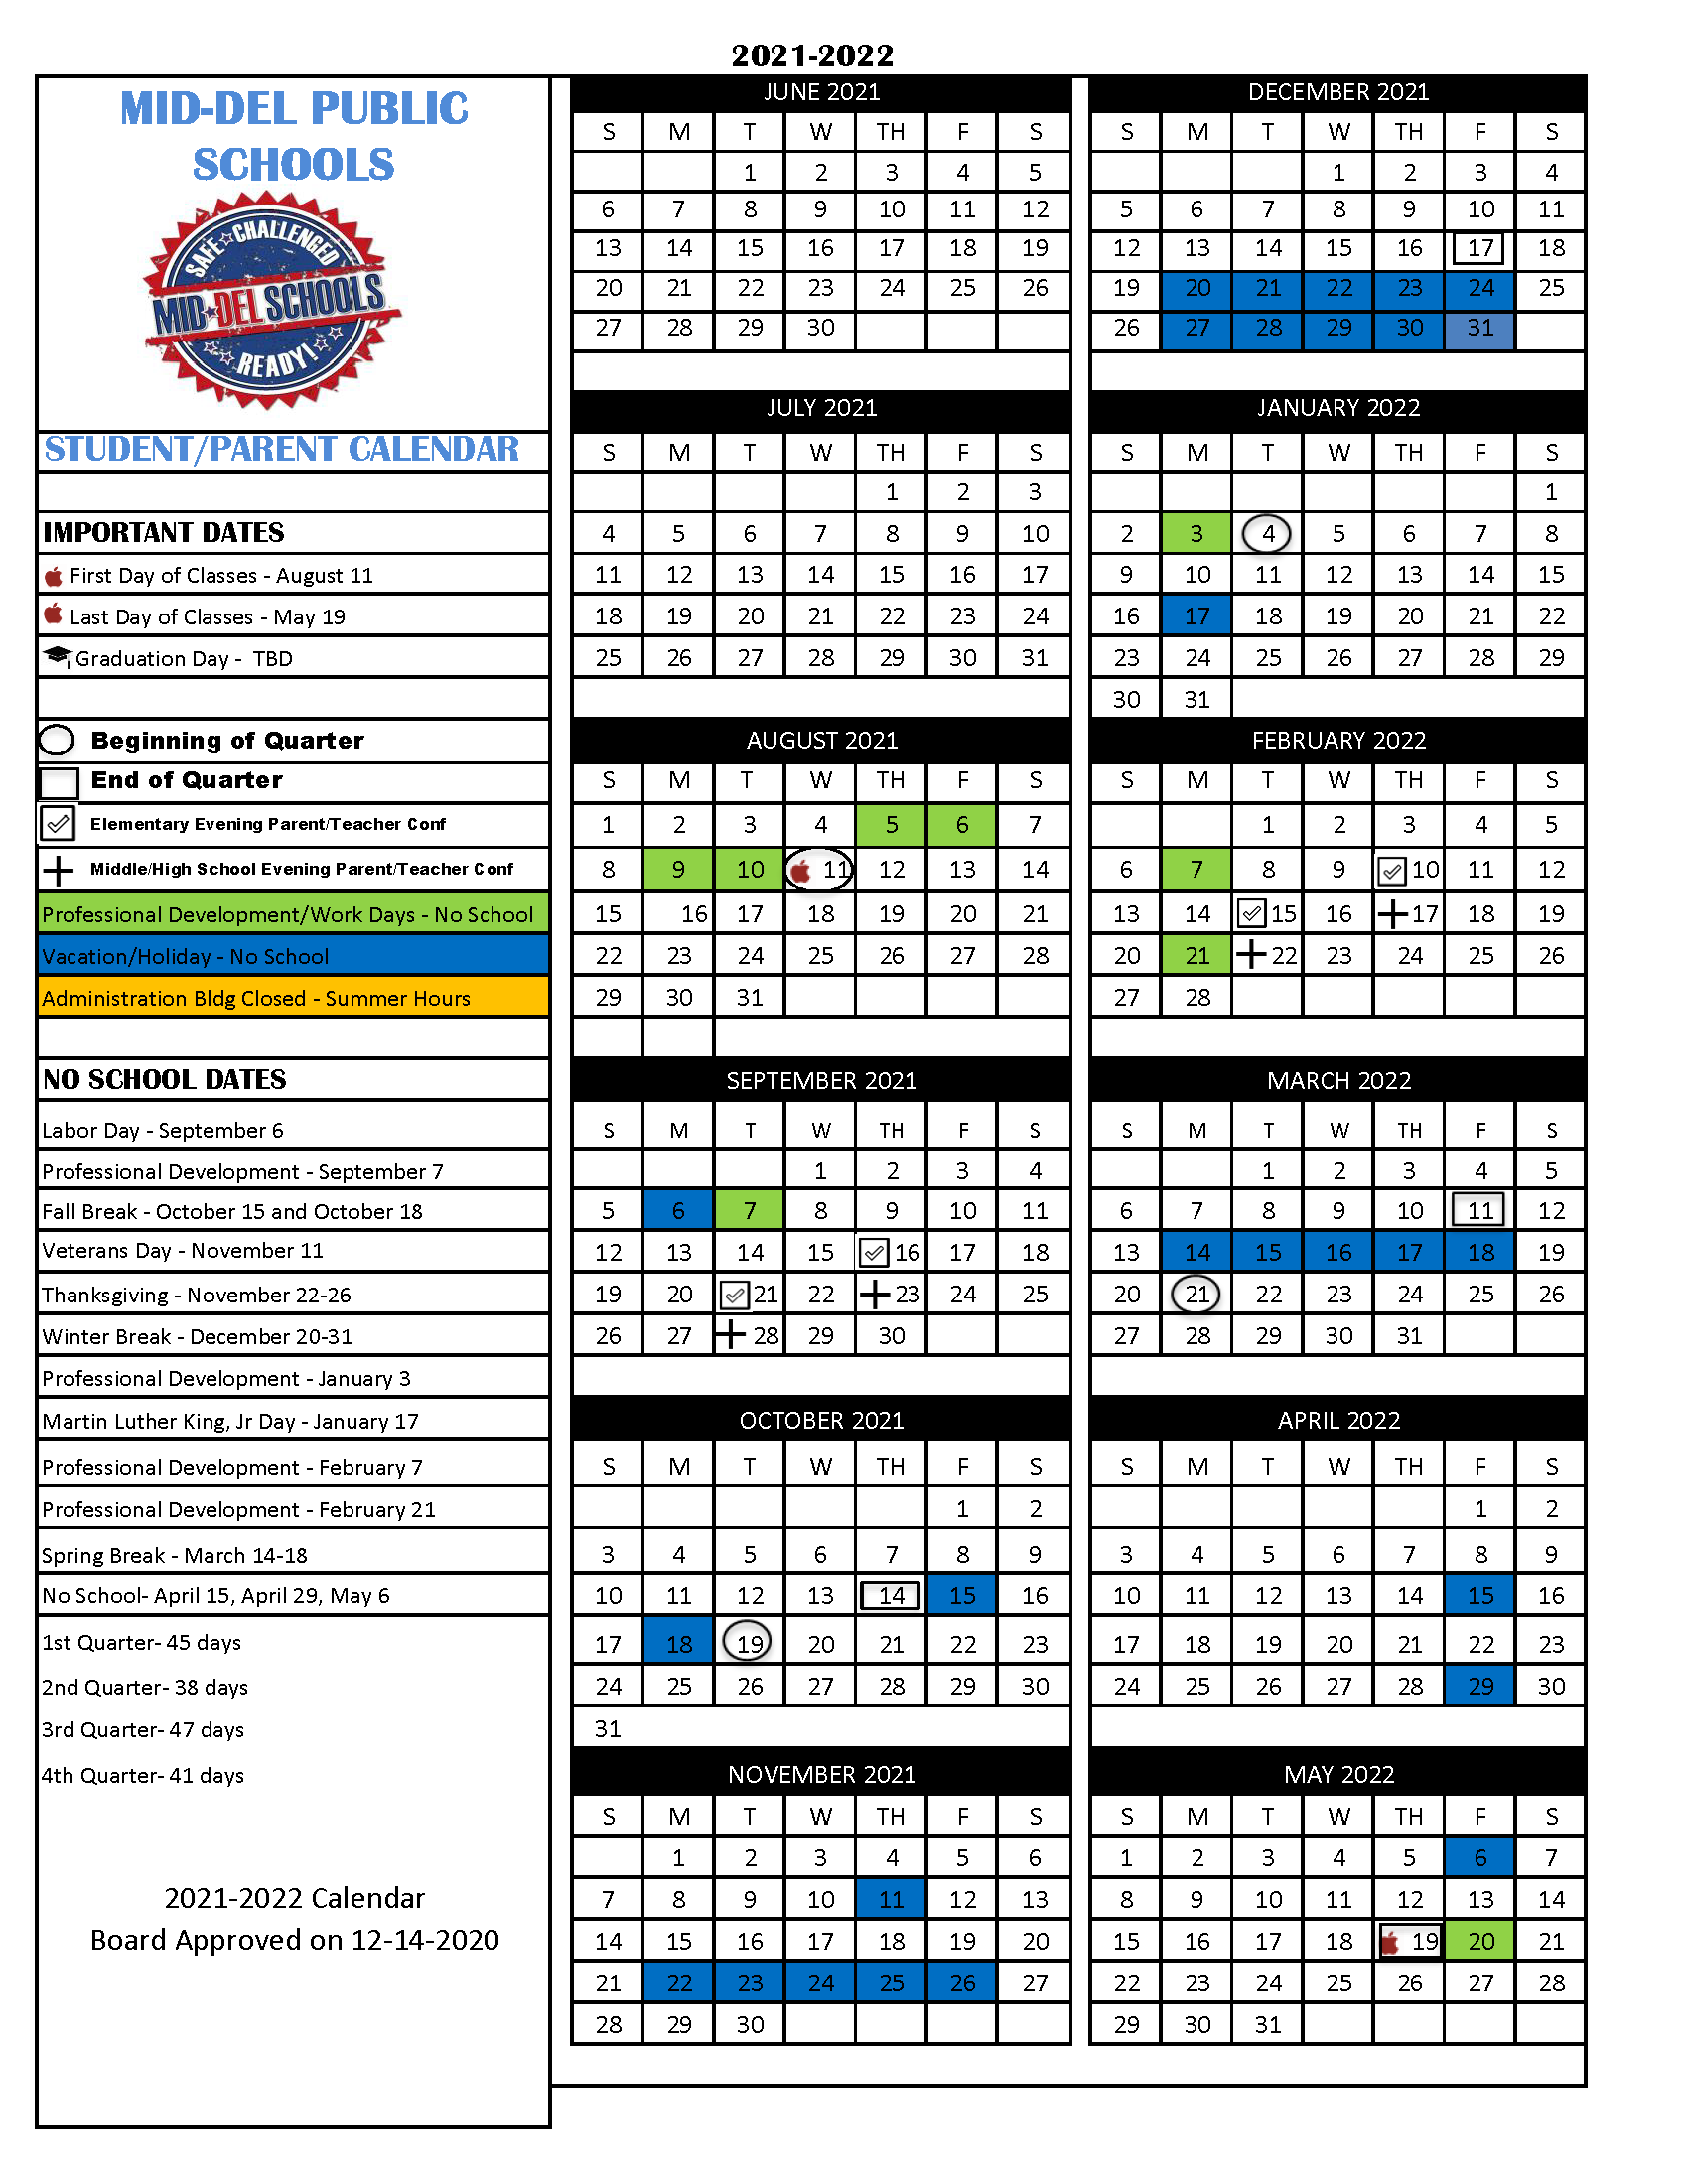 Oklahoma State Spring 2022 Calendar 2021-2022 School Calendar | Mid-Del School District